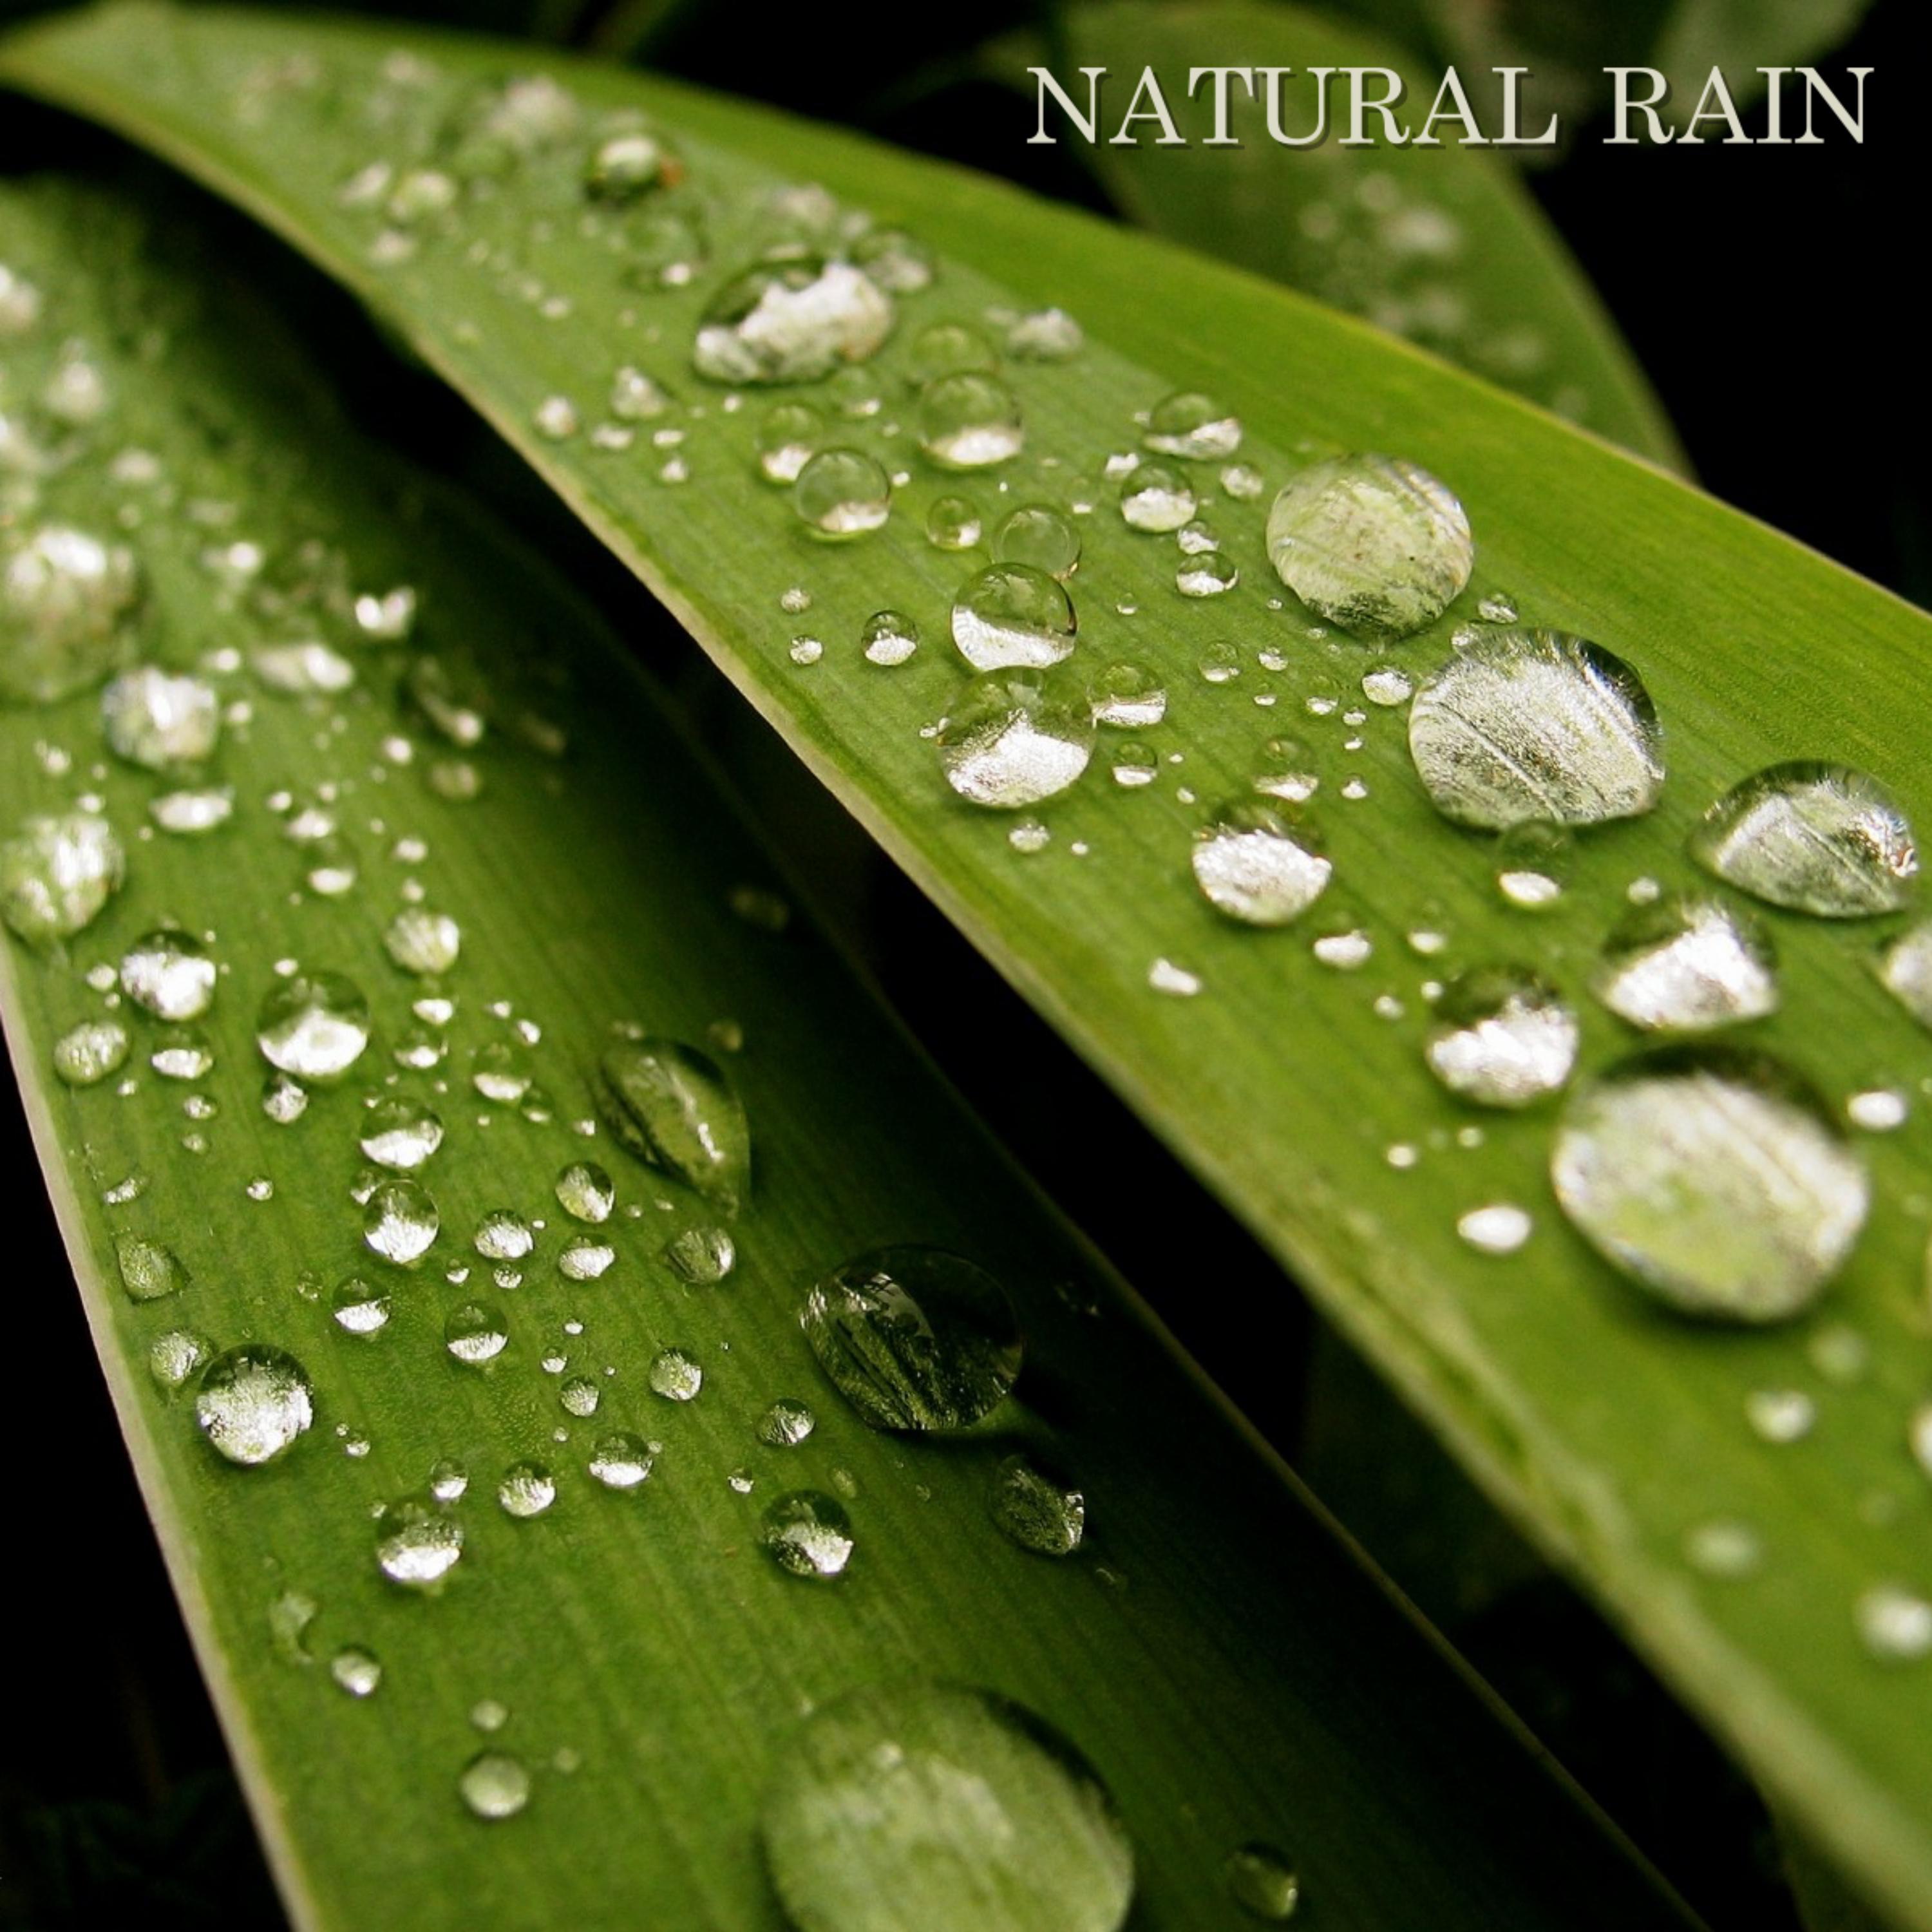 Natural Rain